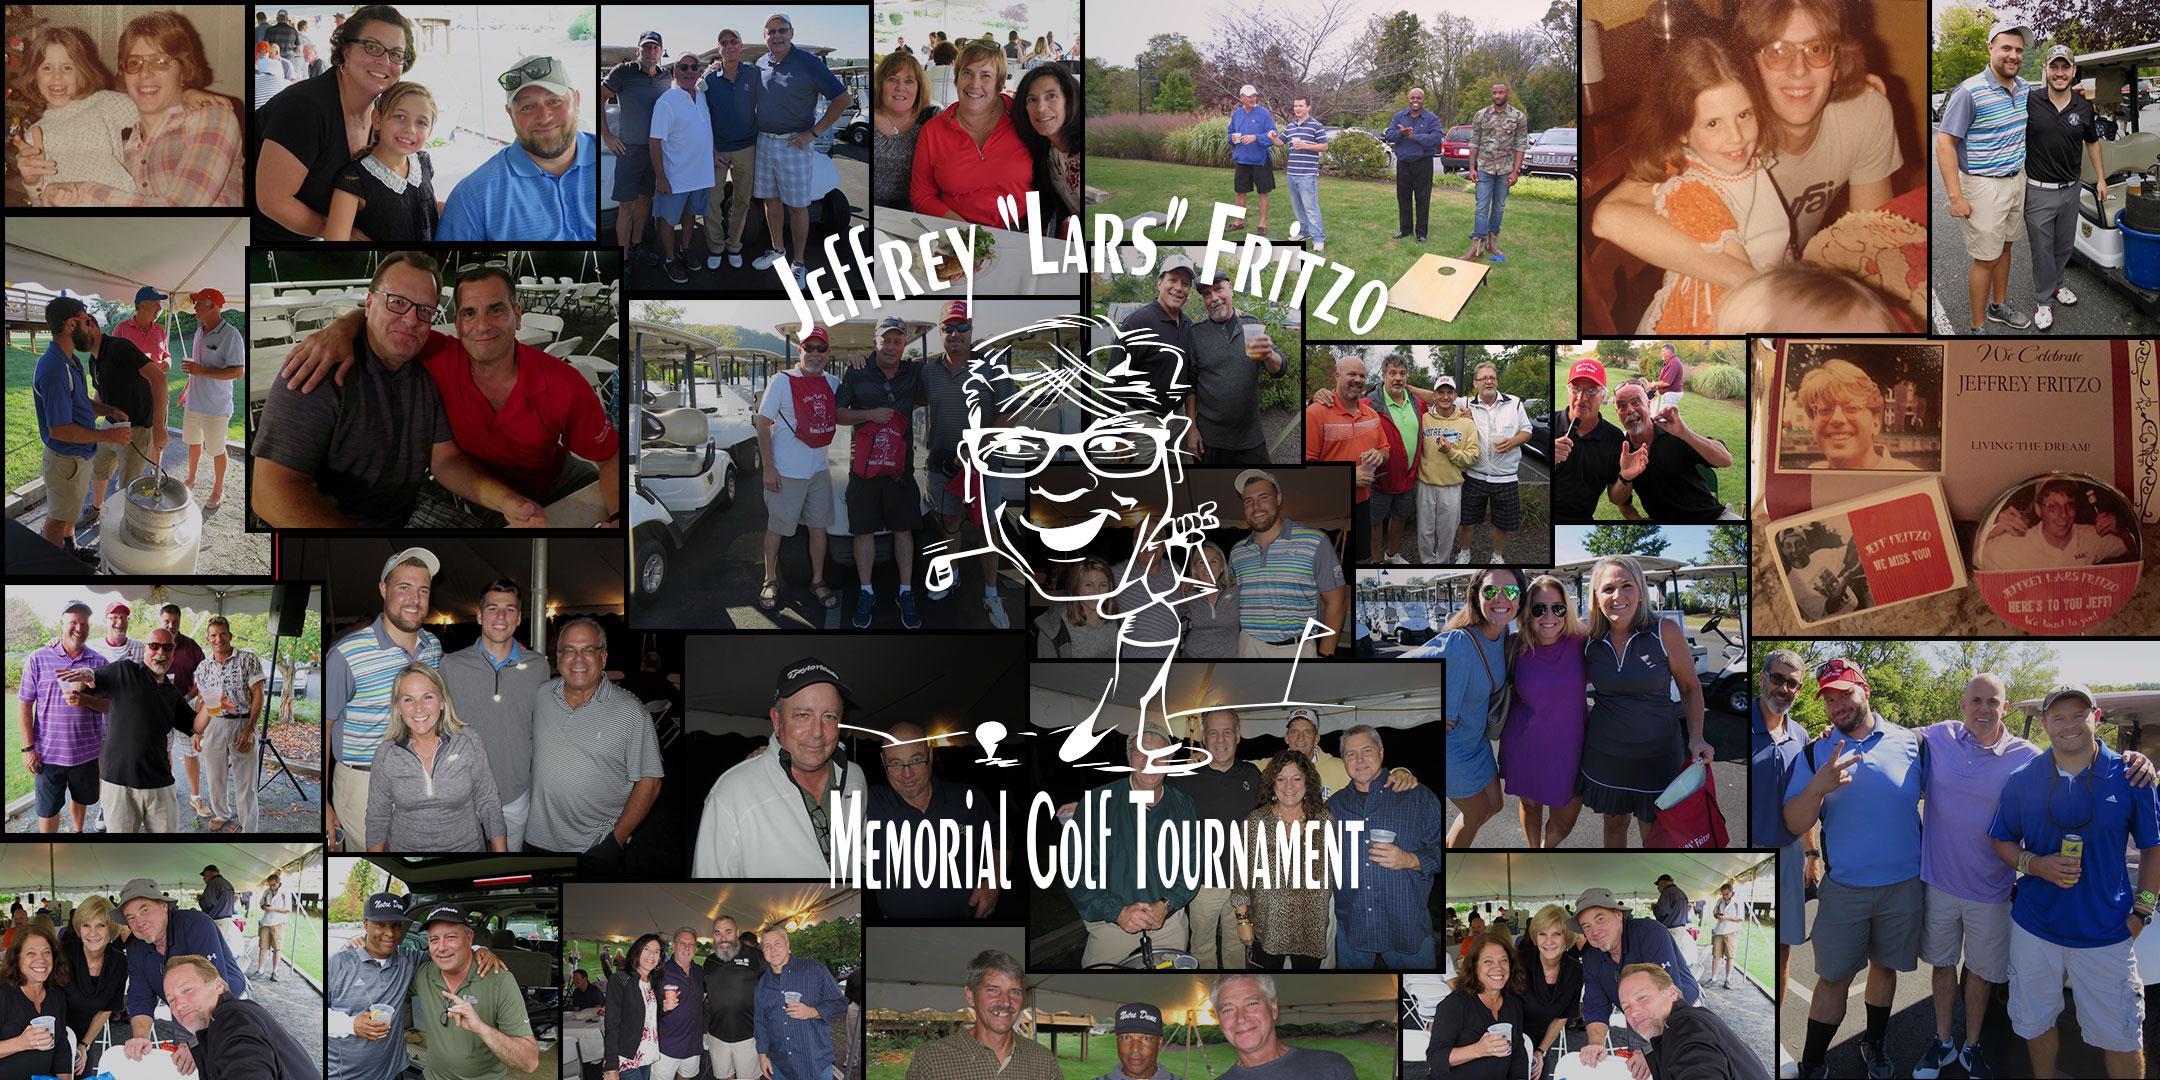 Jeffrey "Lars" Fritzo Memorial Golf Tournament